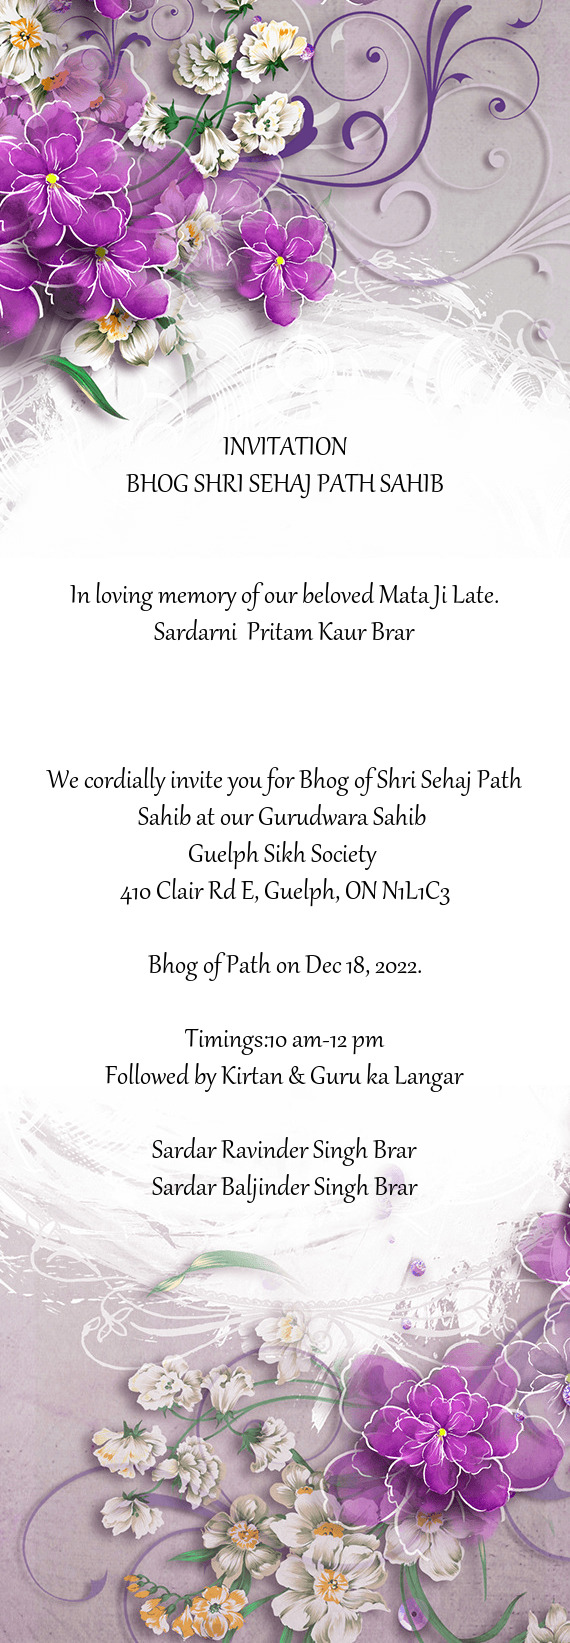 We cordially invite you for Bhog of Shri Sehaj Path Sahib at our Gurudwara Sahib